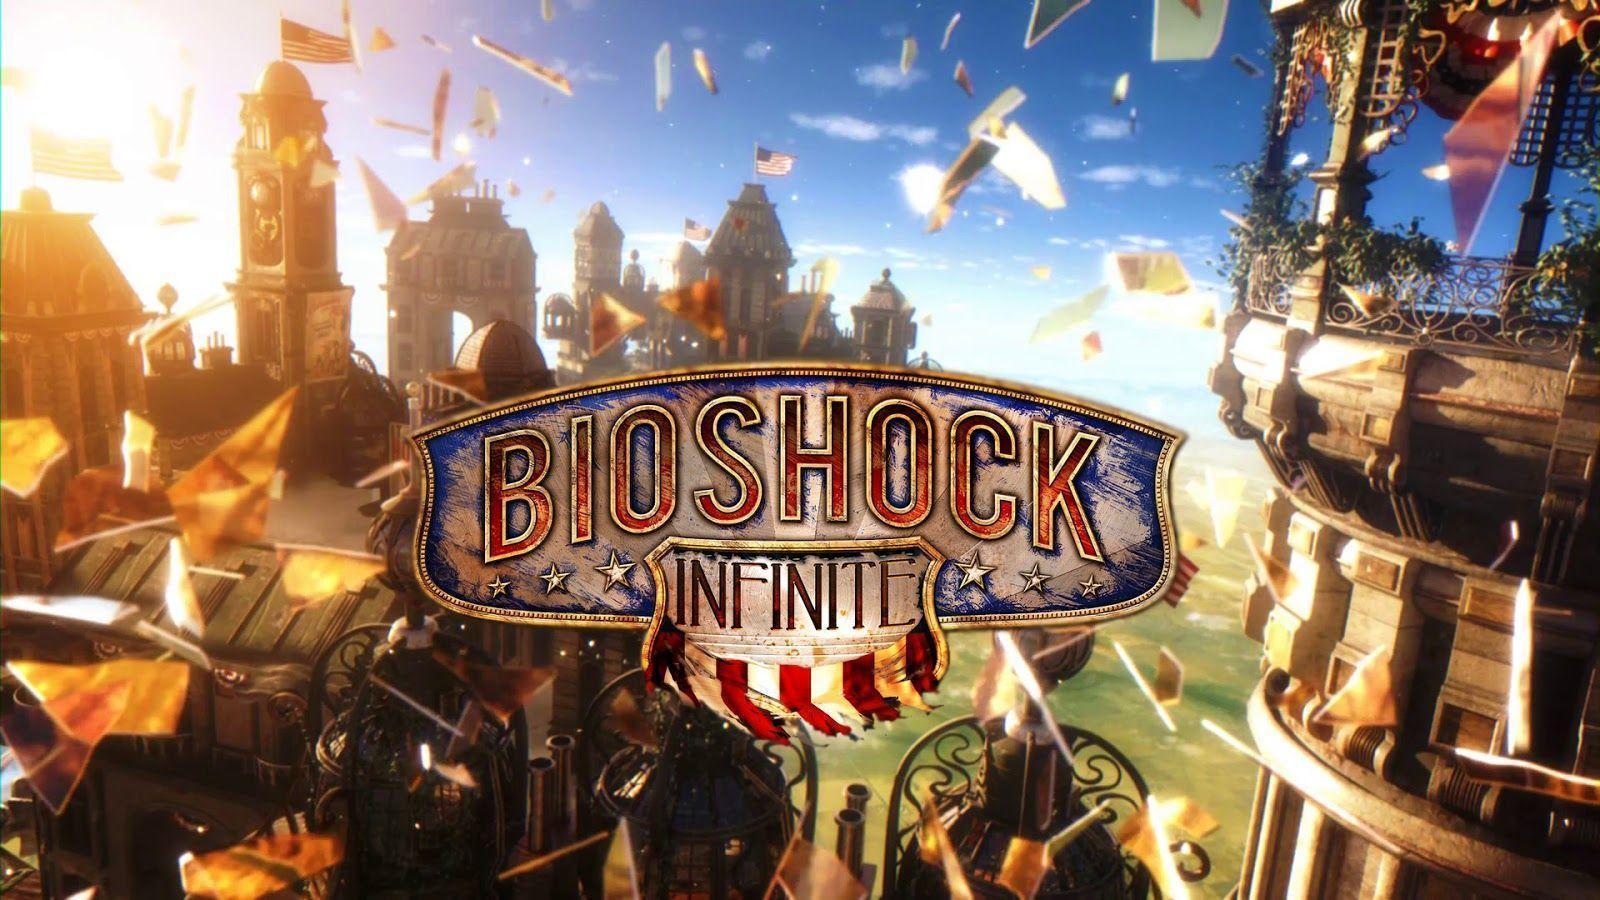 Get The Look: BioShock Infinite. Be Young & Shut Up